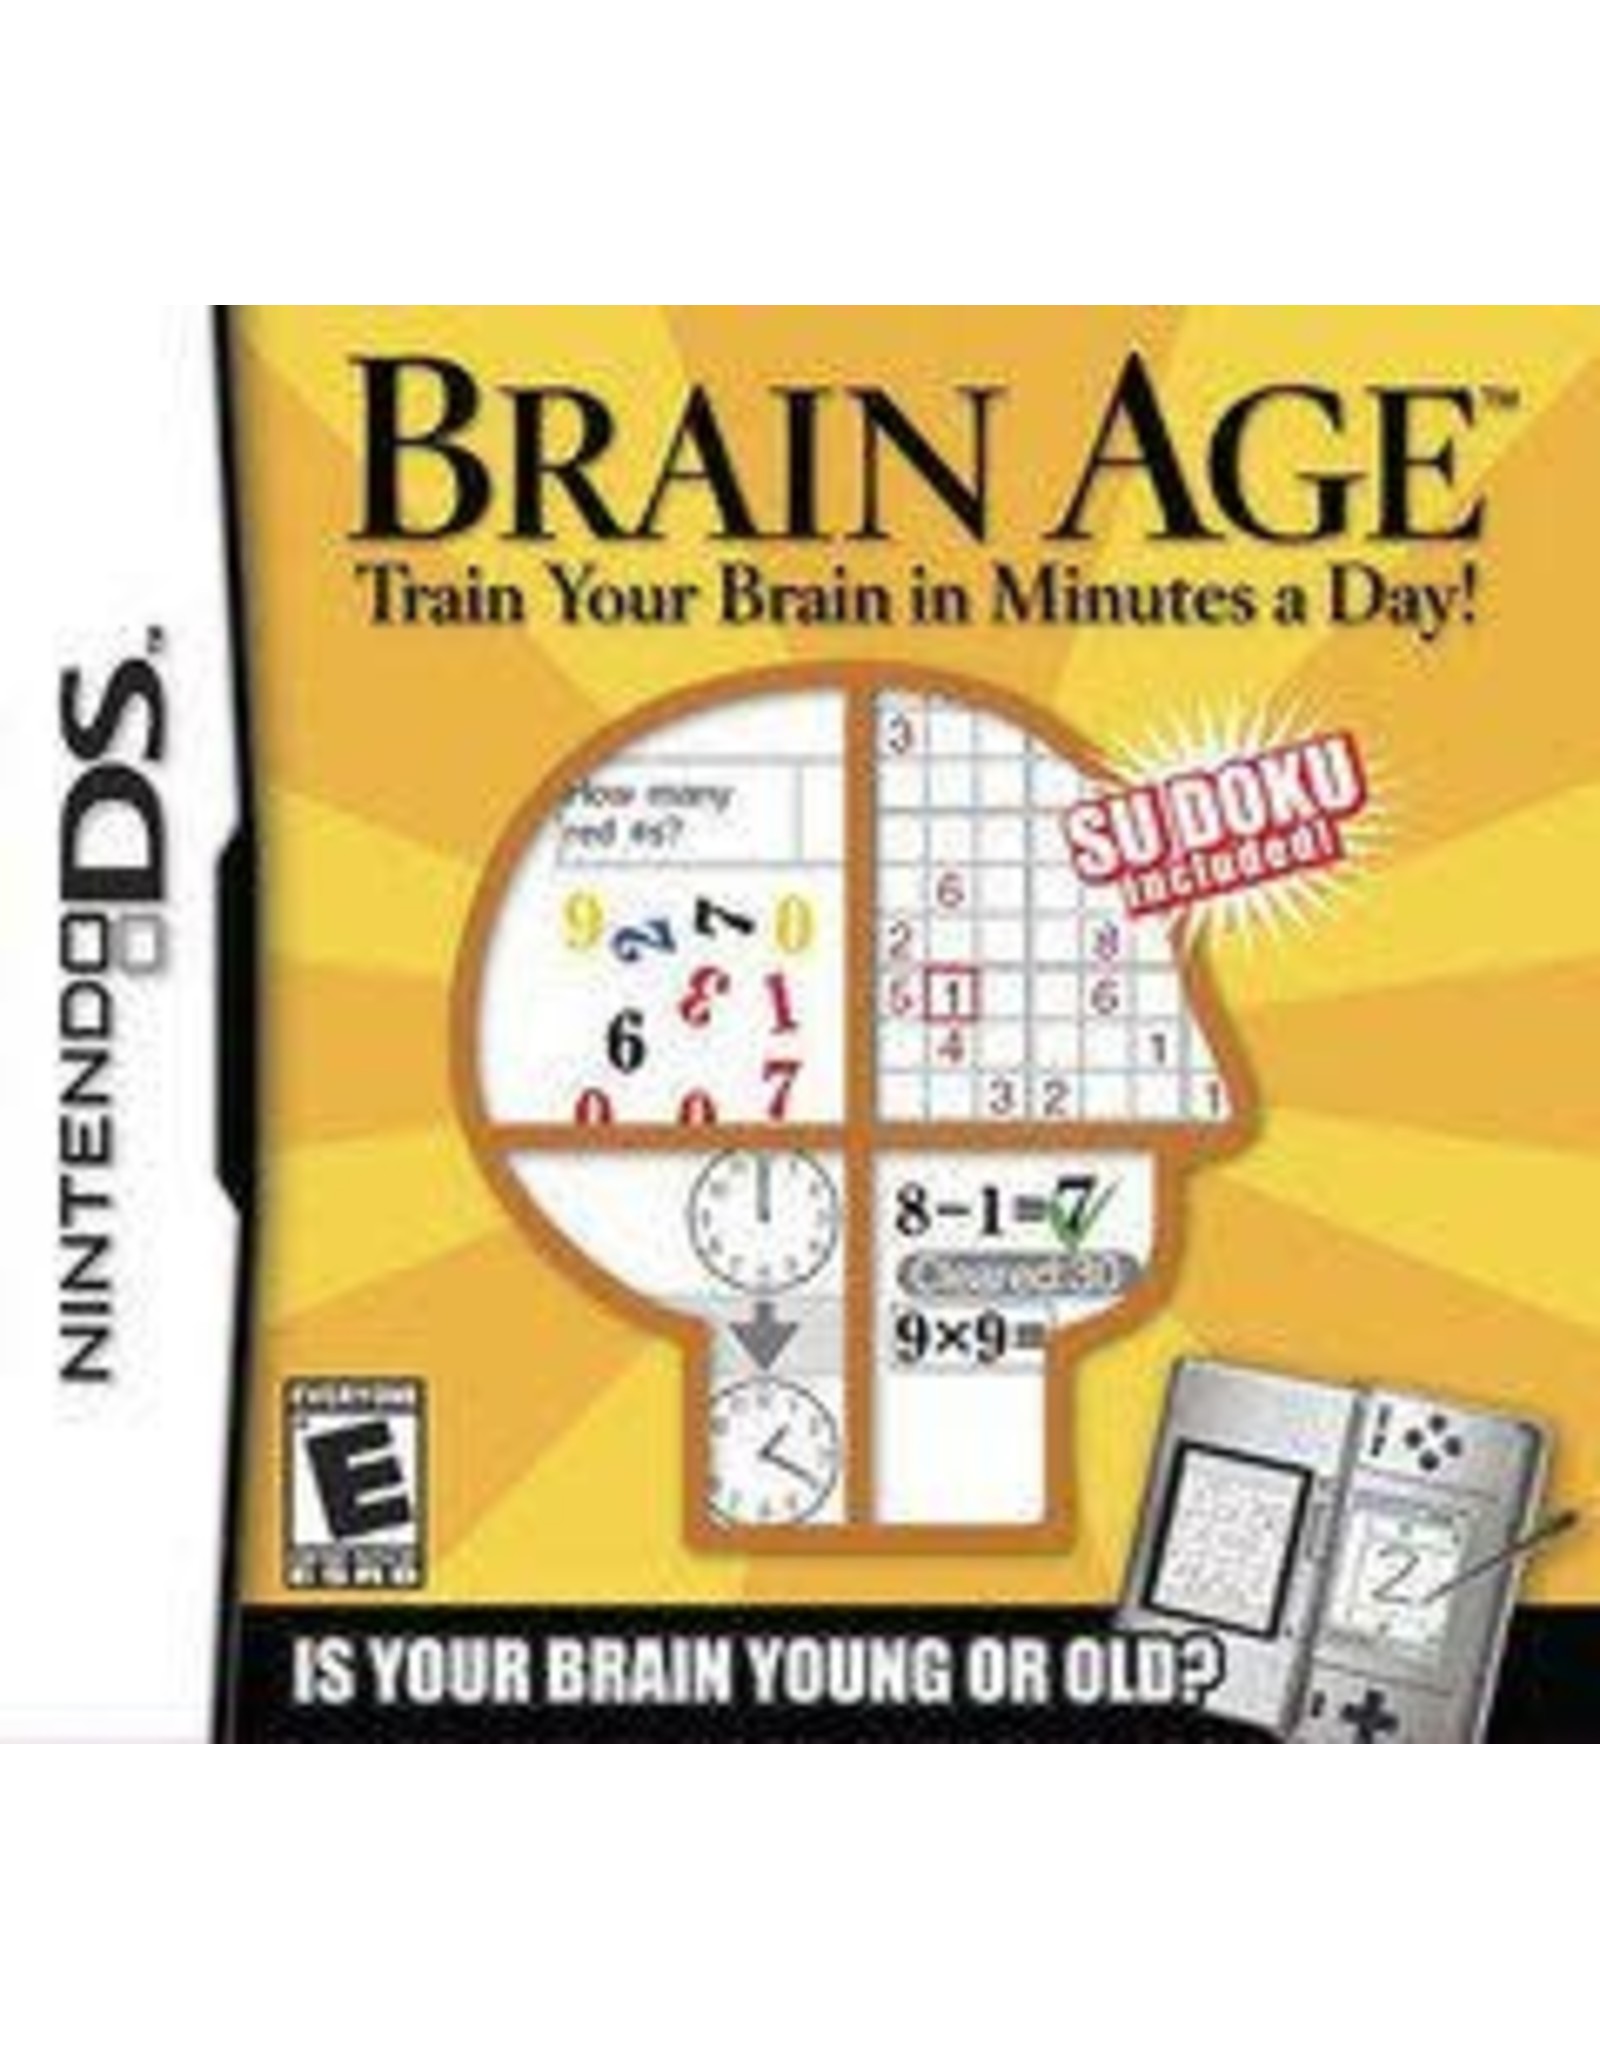 Nintendo DS Brain Age (No Manual)